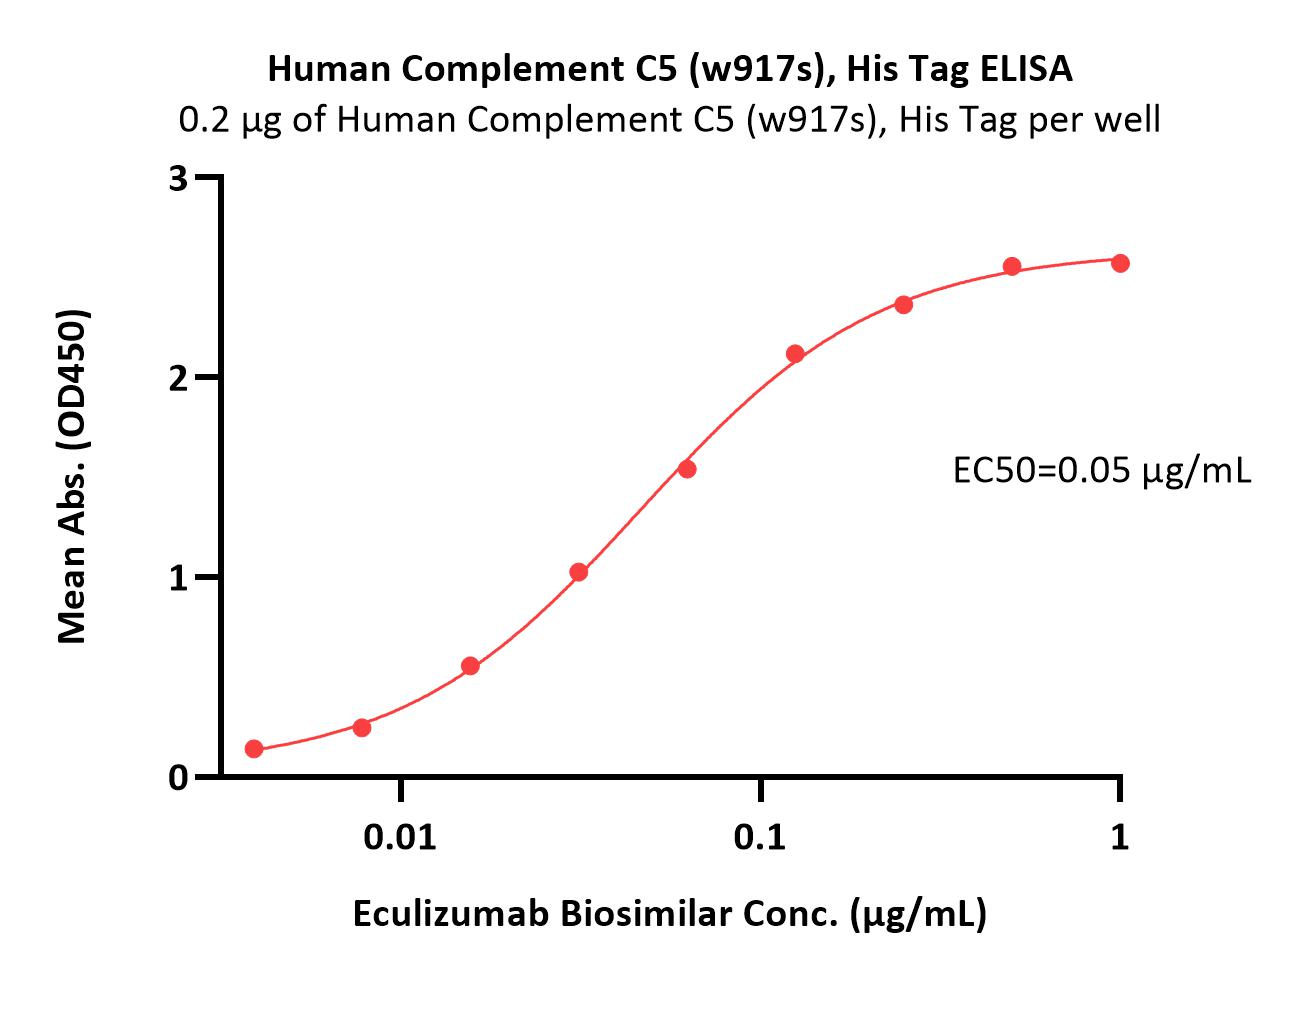 Biotinylated Human  ELISA